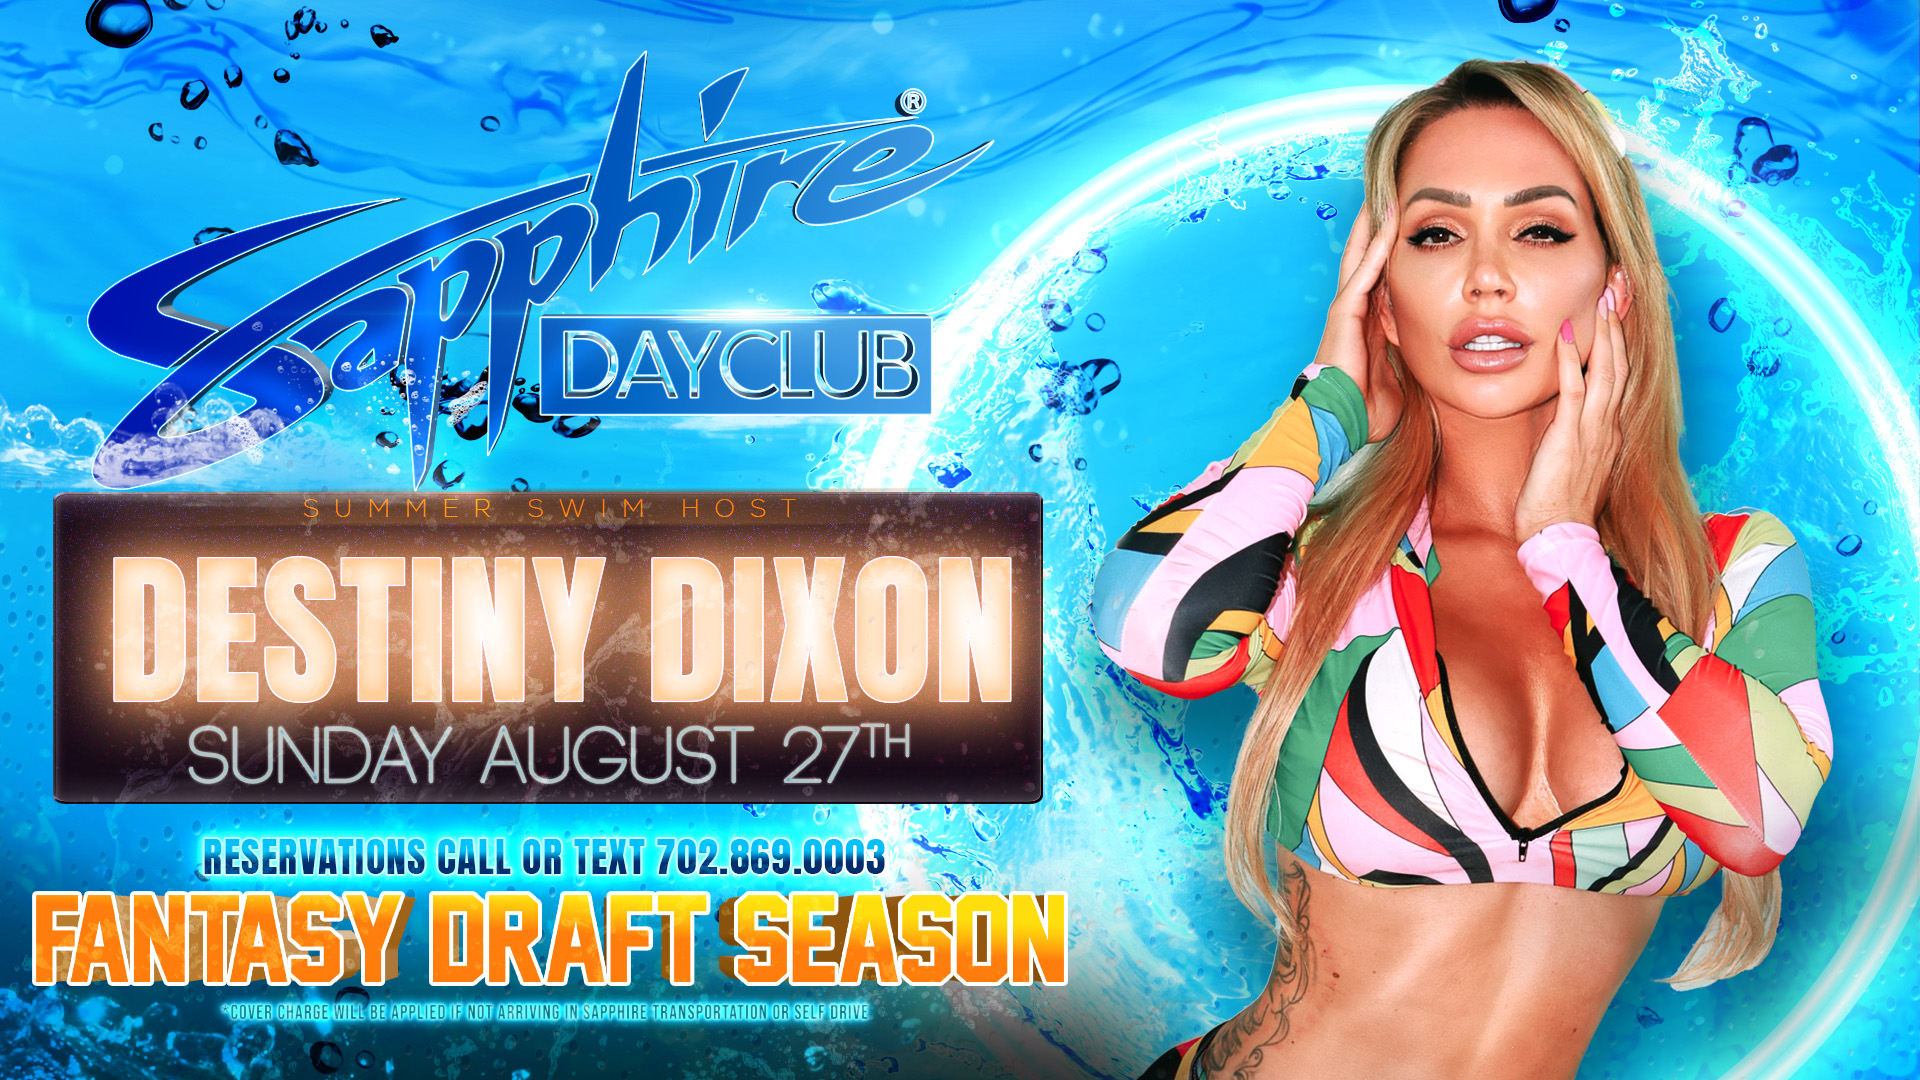 Destiny Dixon hosts Sapphire Pool